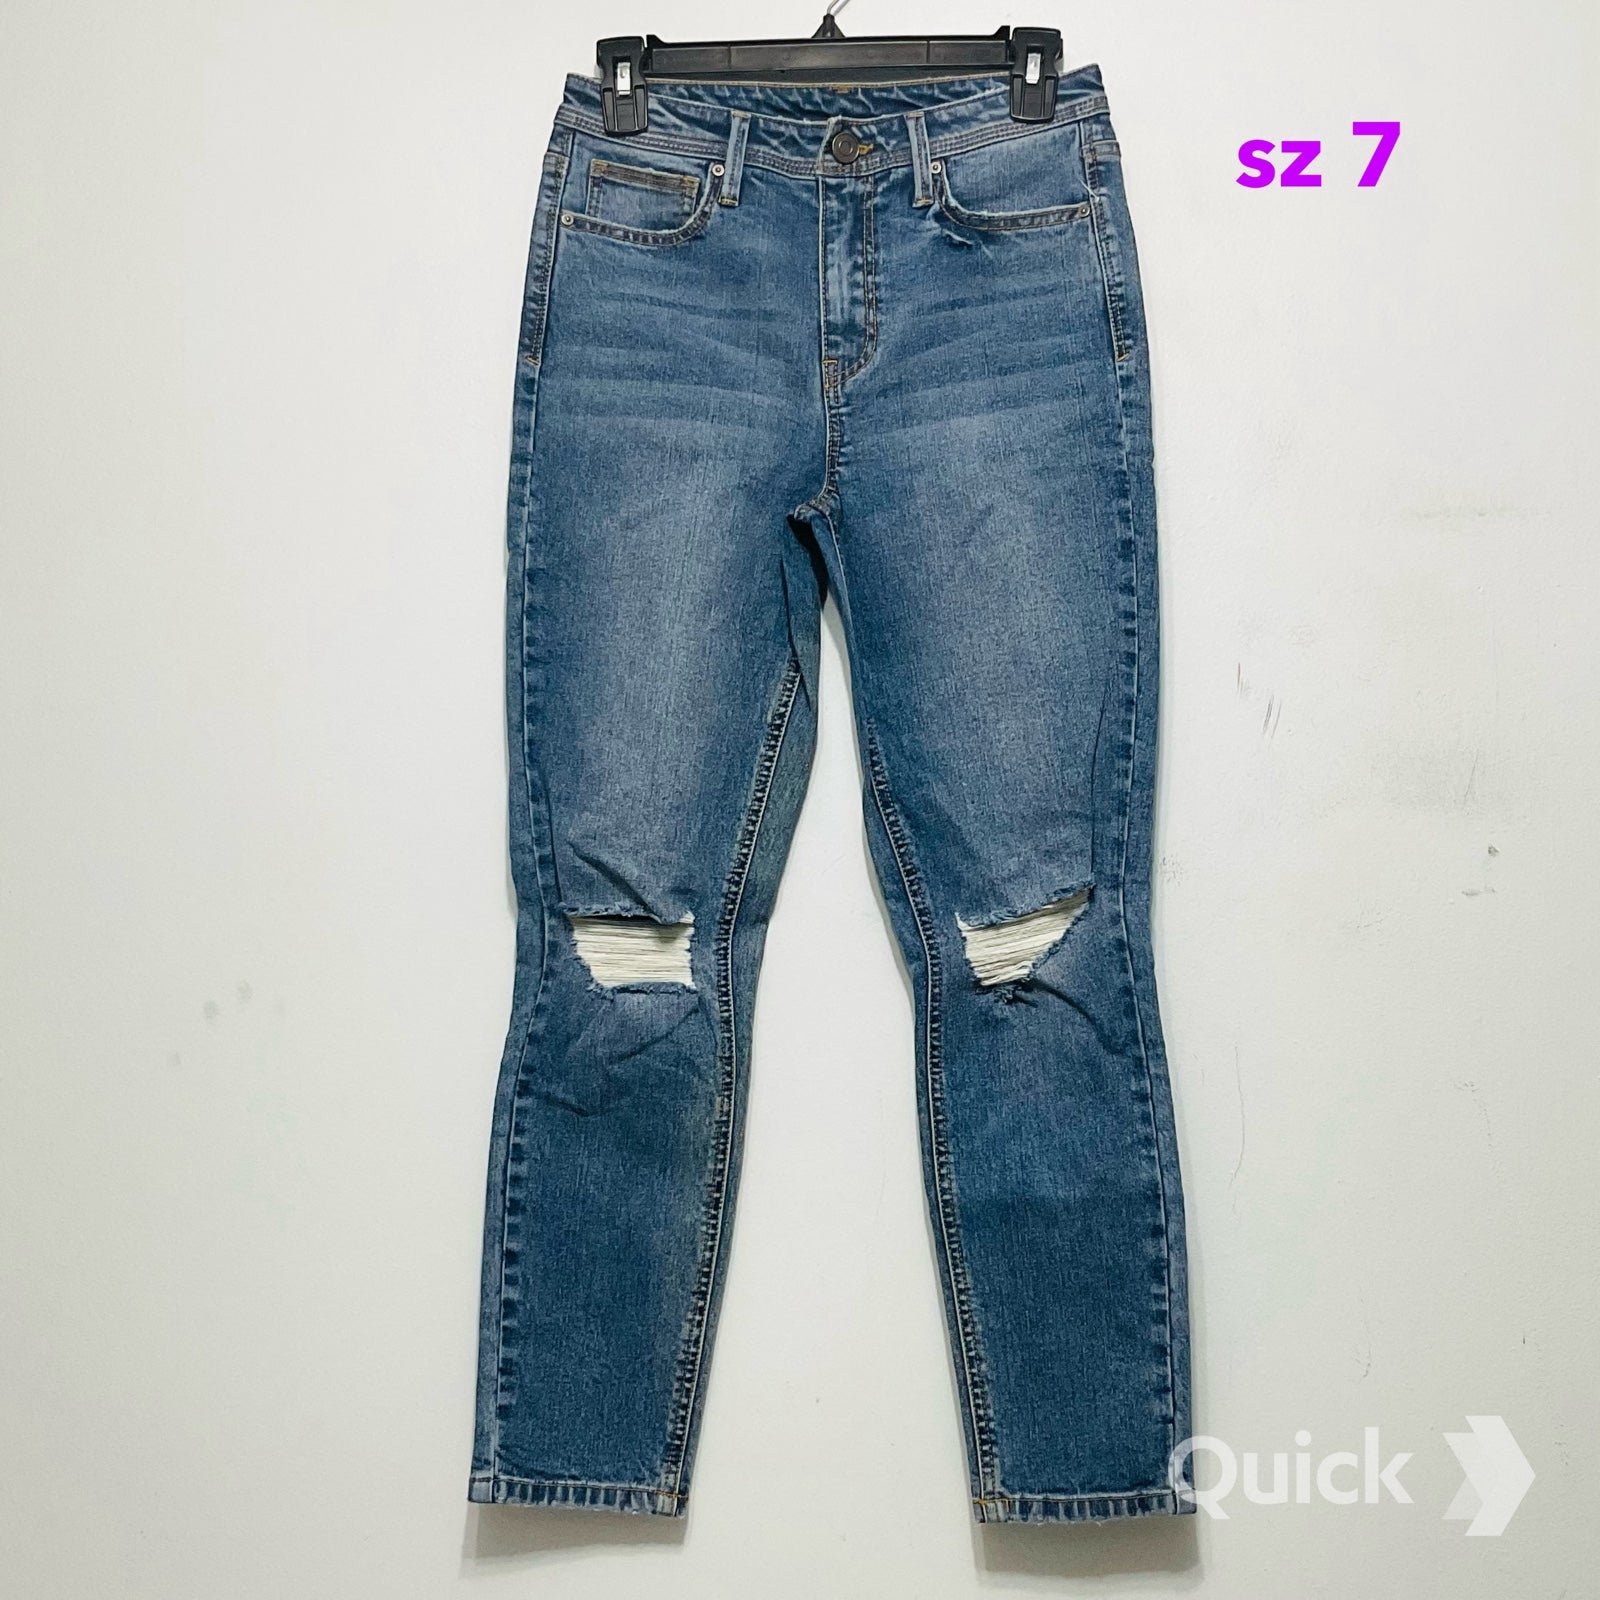 The Best Seller sz 7 - NWT Indigo Rein Distressed Skinny Jeans Pe0pz6nhn US Sale